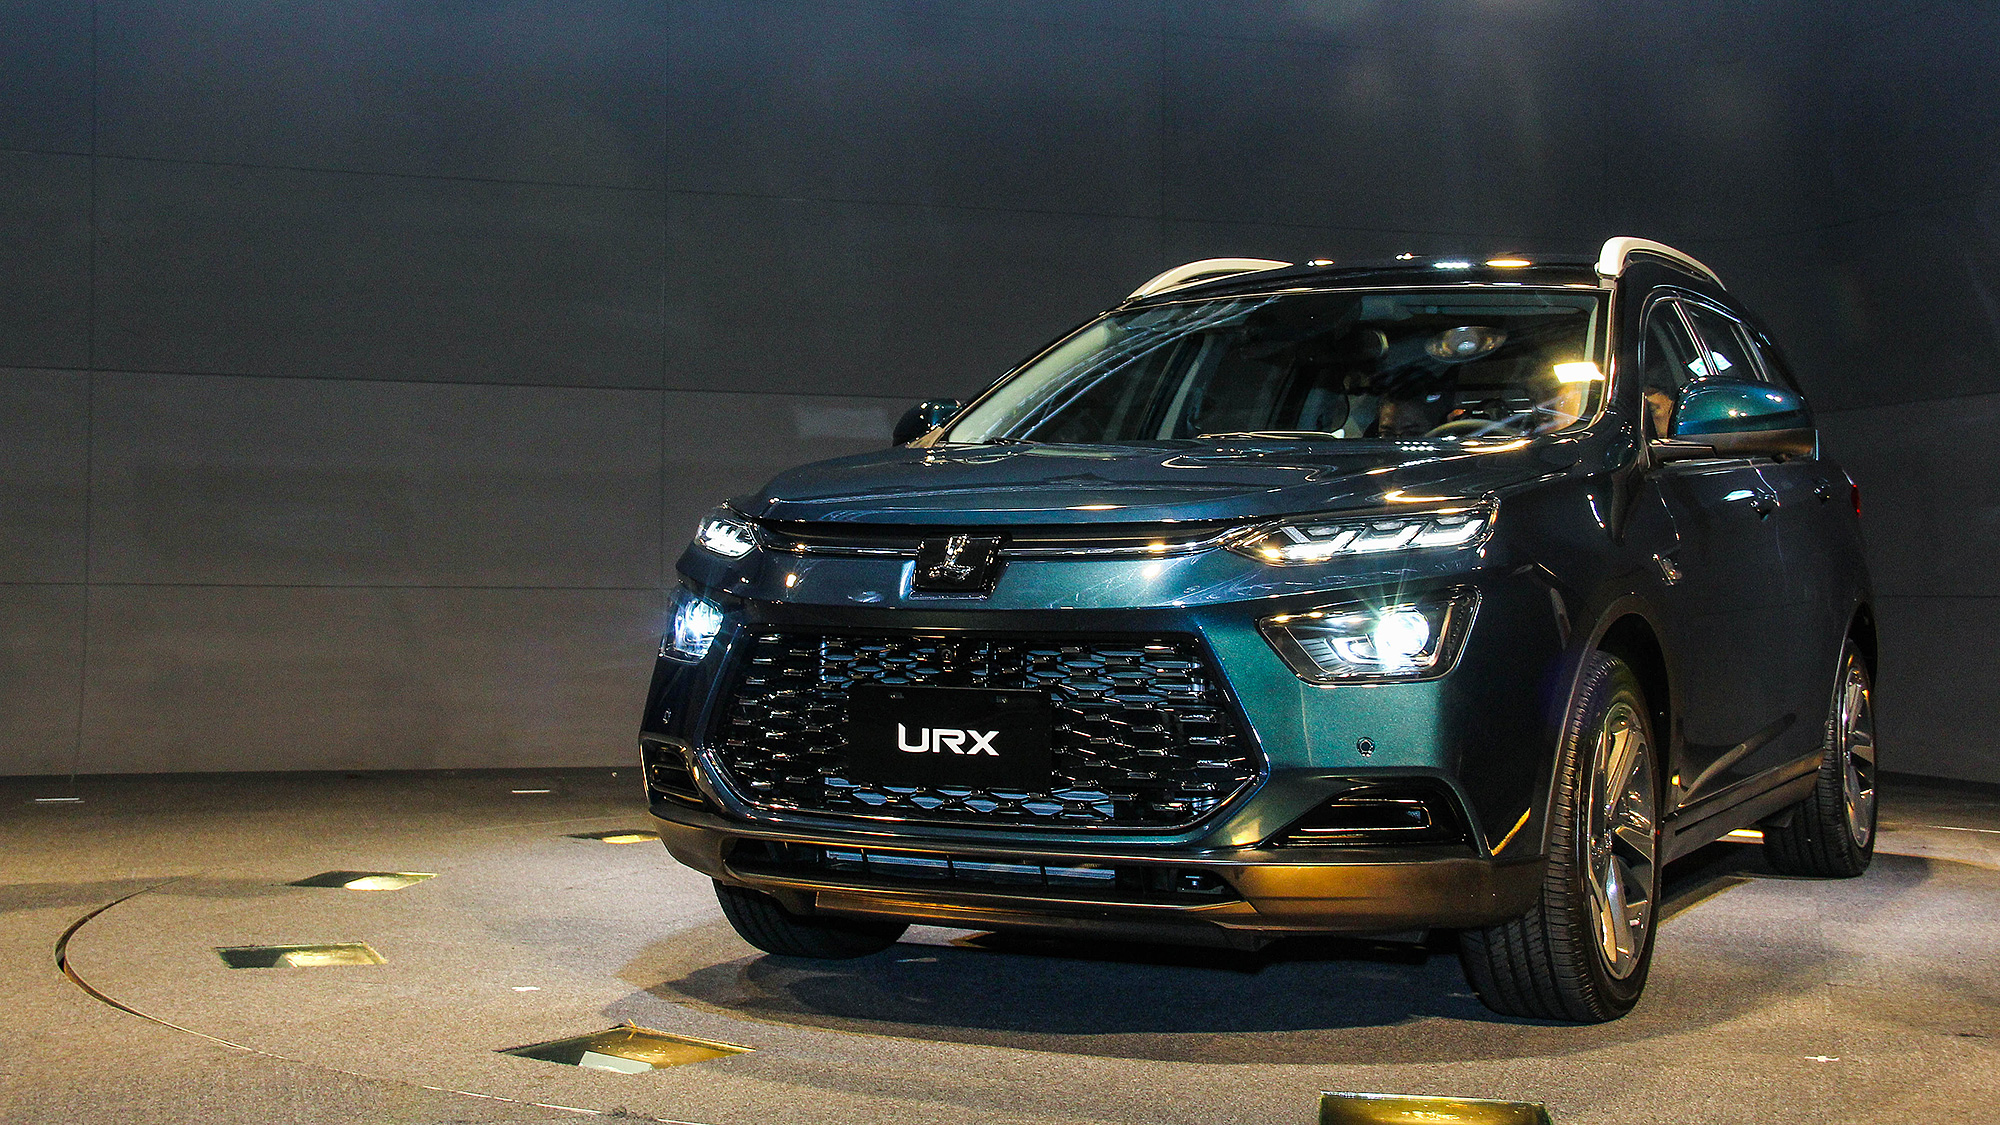 Luxgen URX 實車首度亮相， 5+2 座新物種有望 11 月發表上市